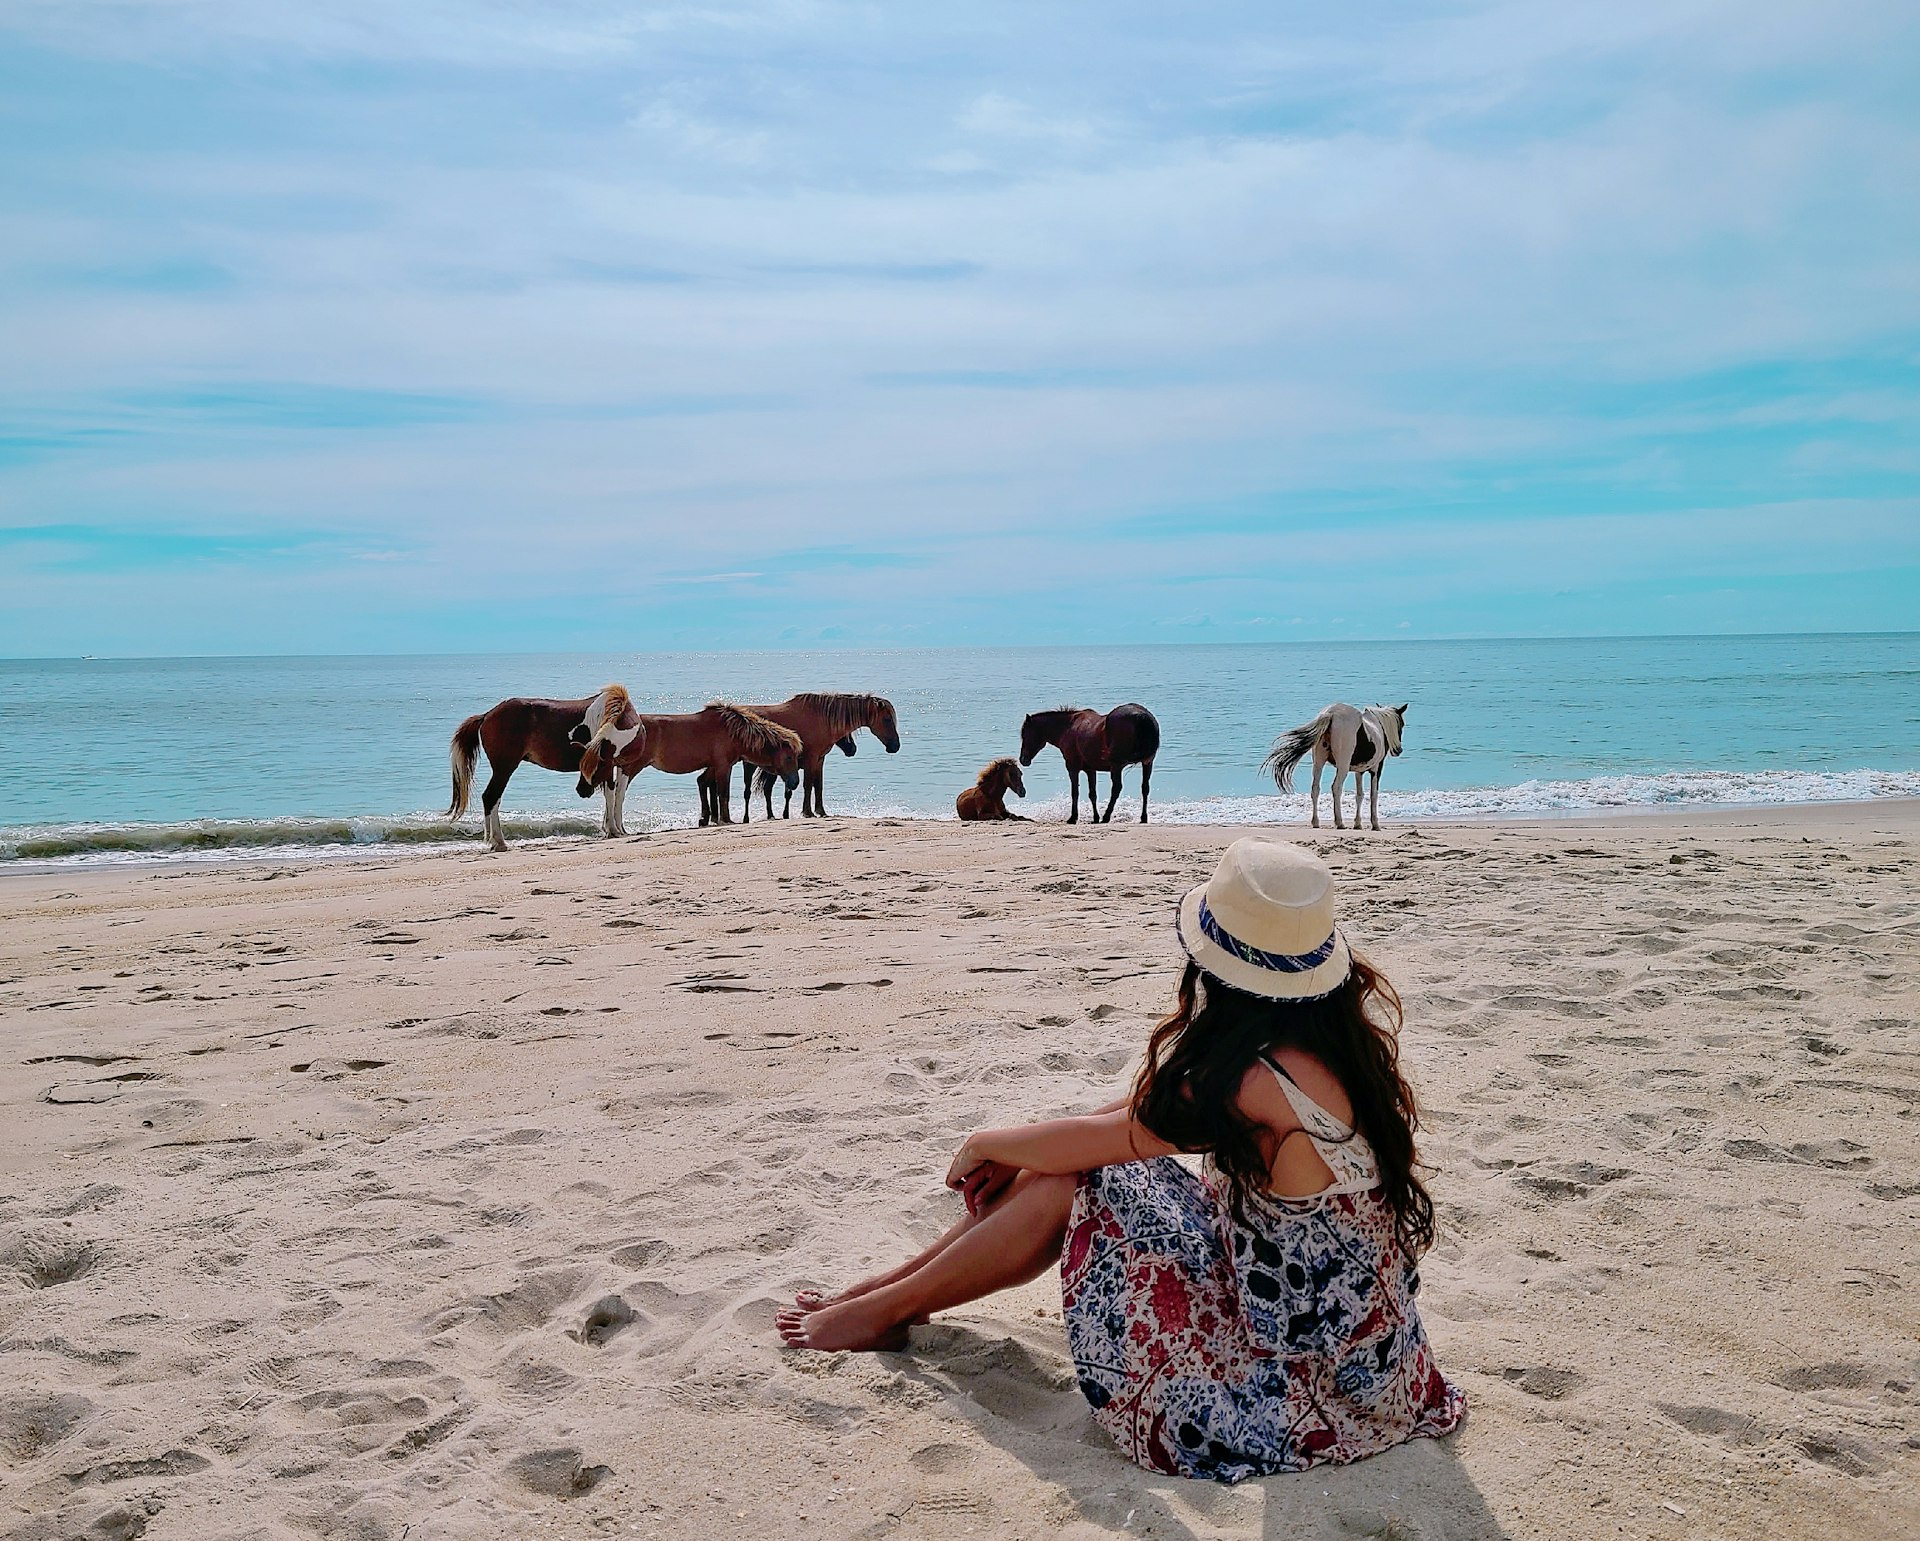 A woman wacthes the wild horses of Assateague Island National Seashore, Virginia, USA